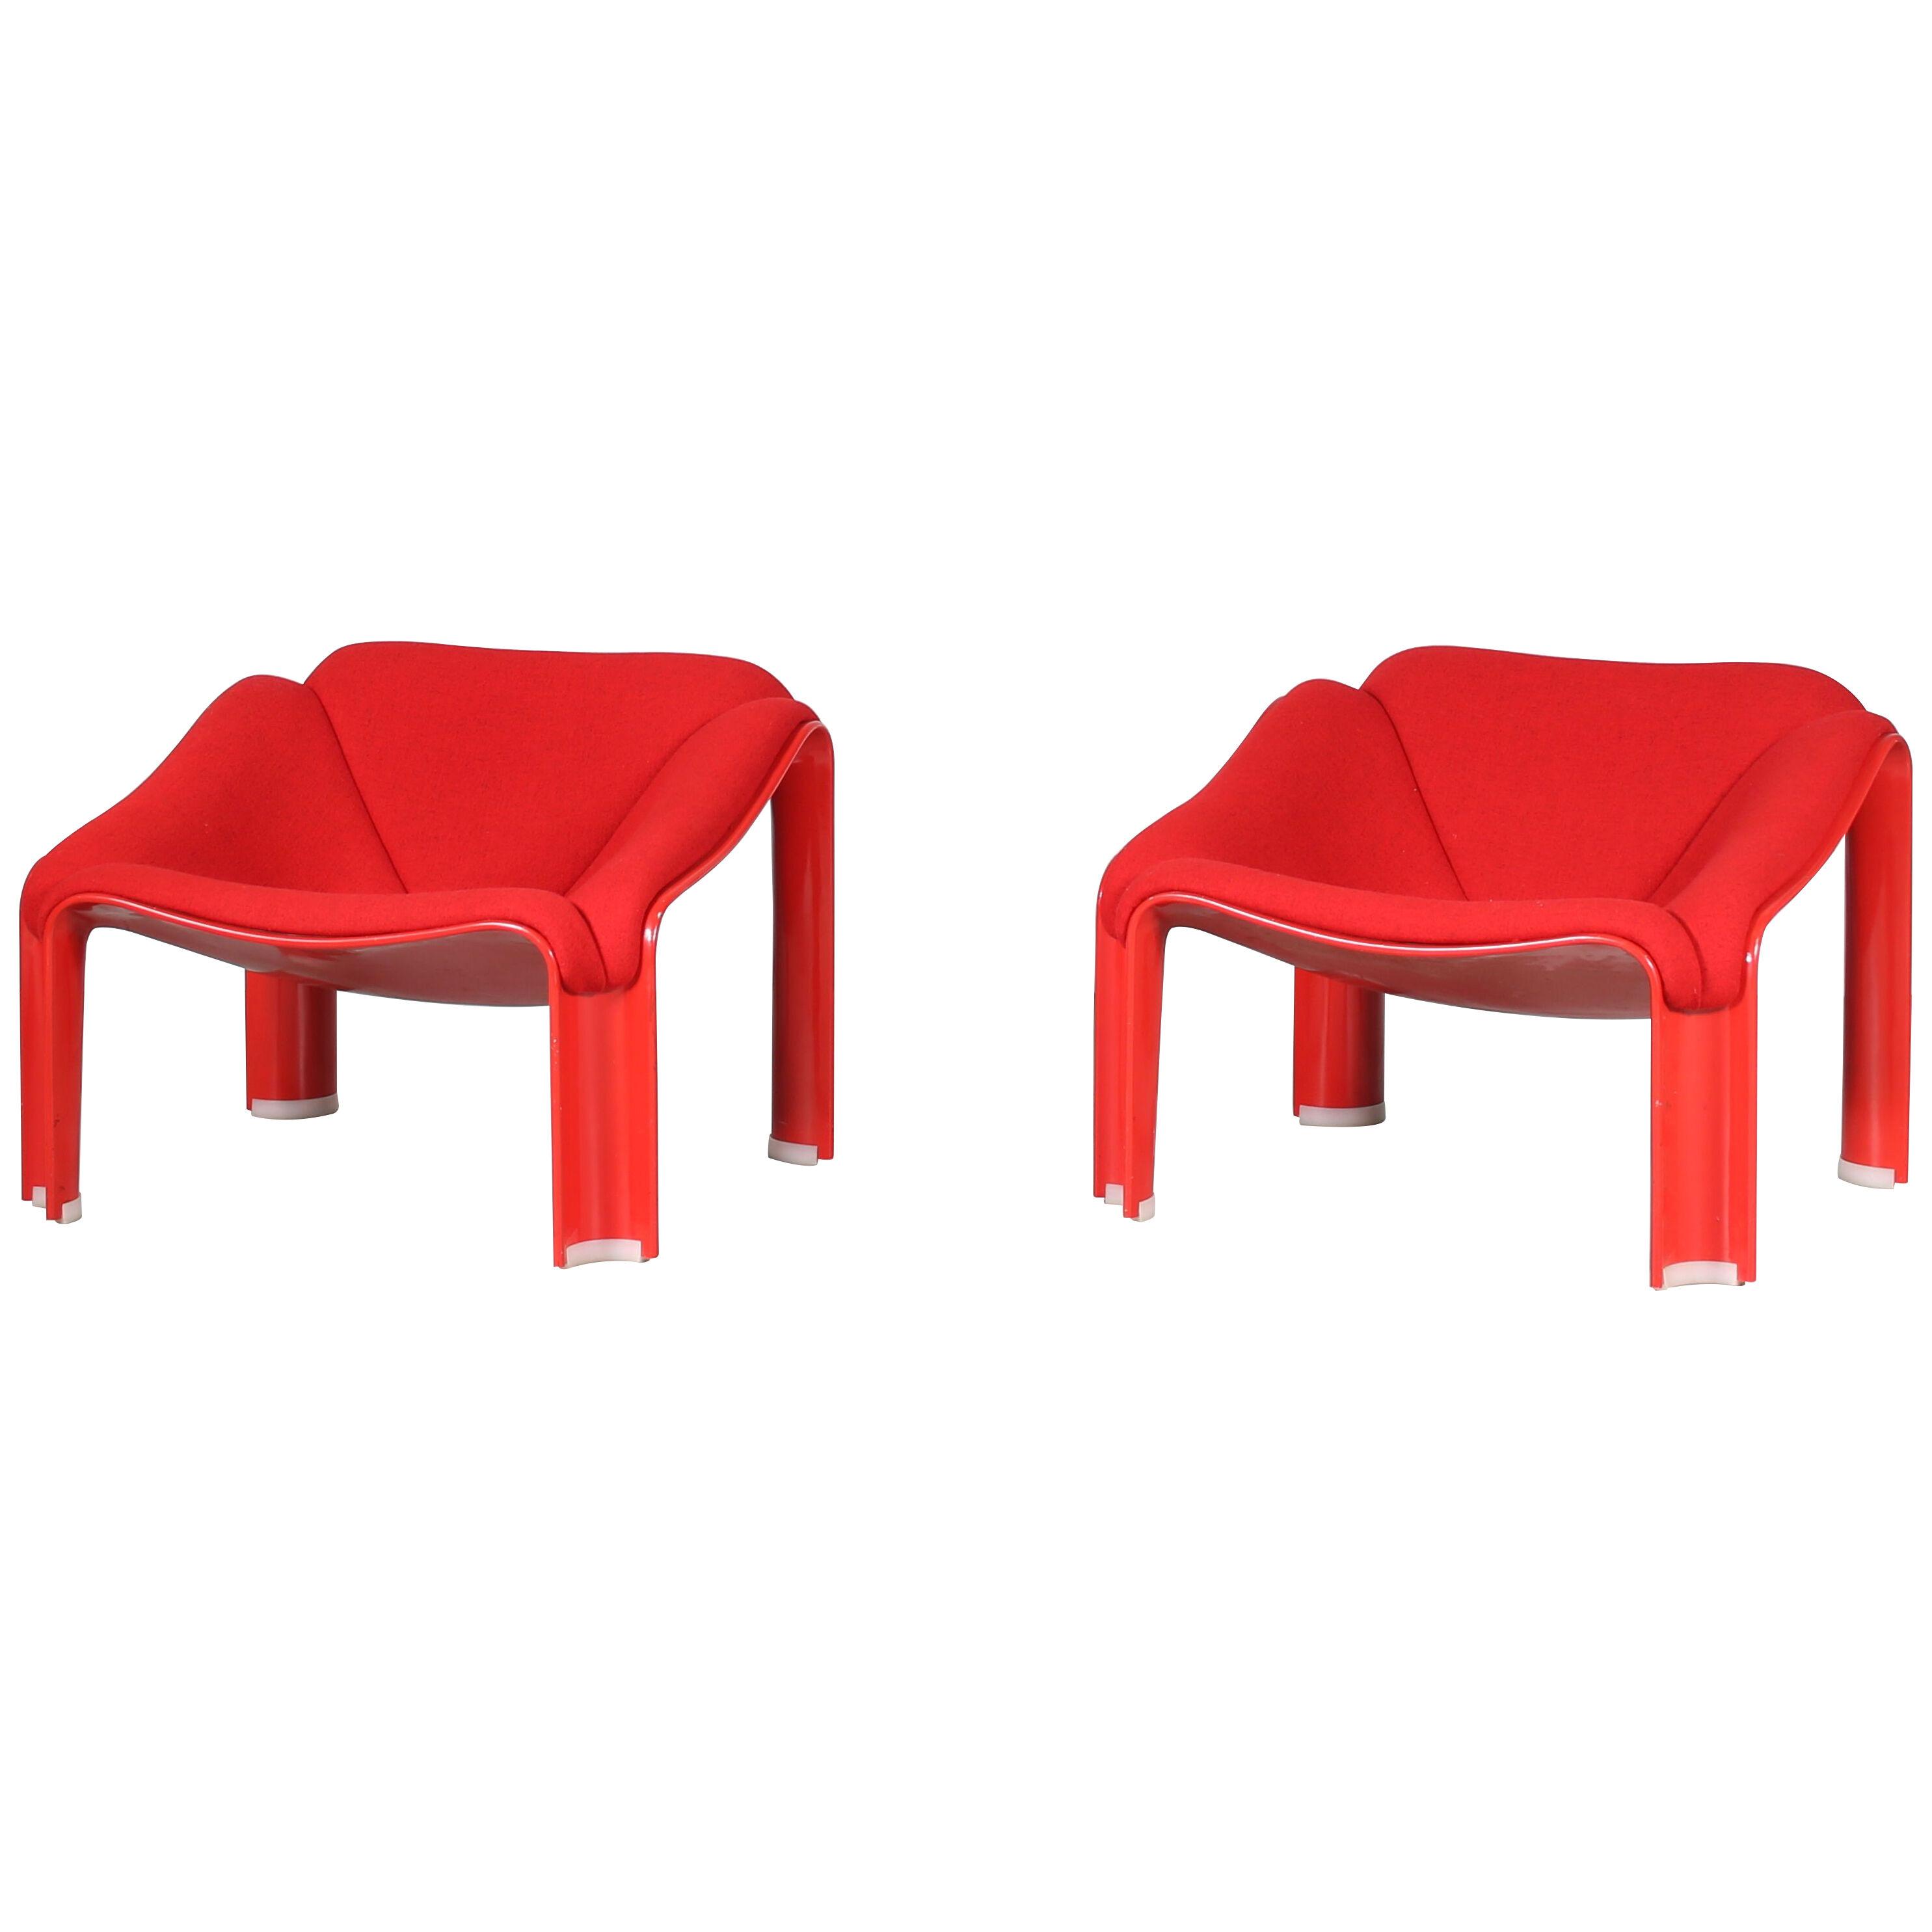 Pierre Paulin “Model 300” Chair for Artifort, Netherlands 1970